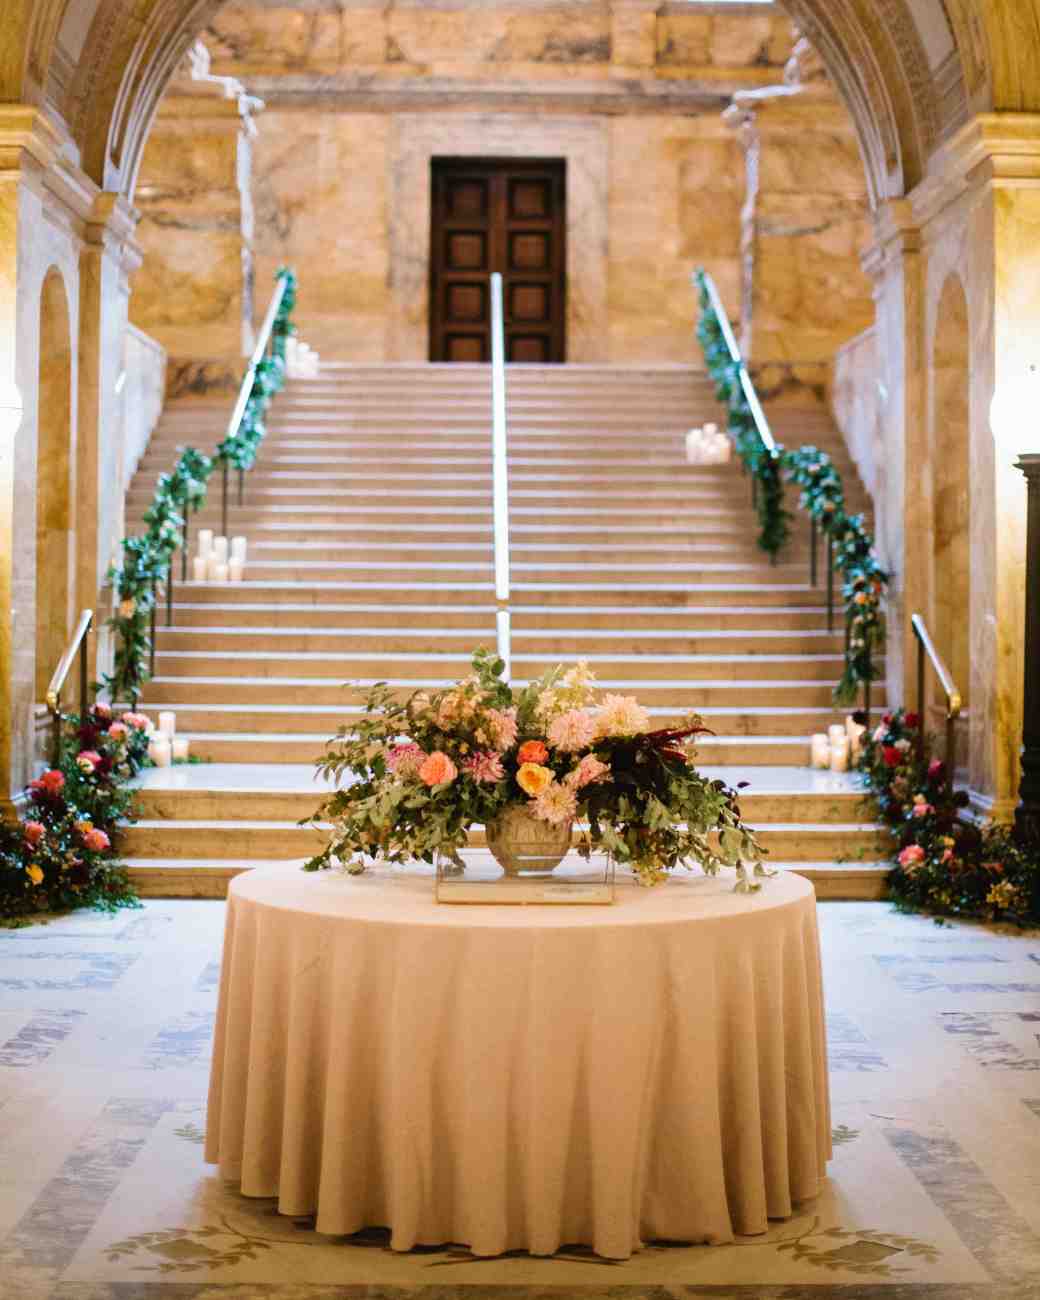 katie kent wedding stairs 109 s112765 0316 vert - Boston Library Wedding Video: Epitome of Elegance